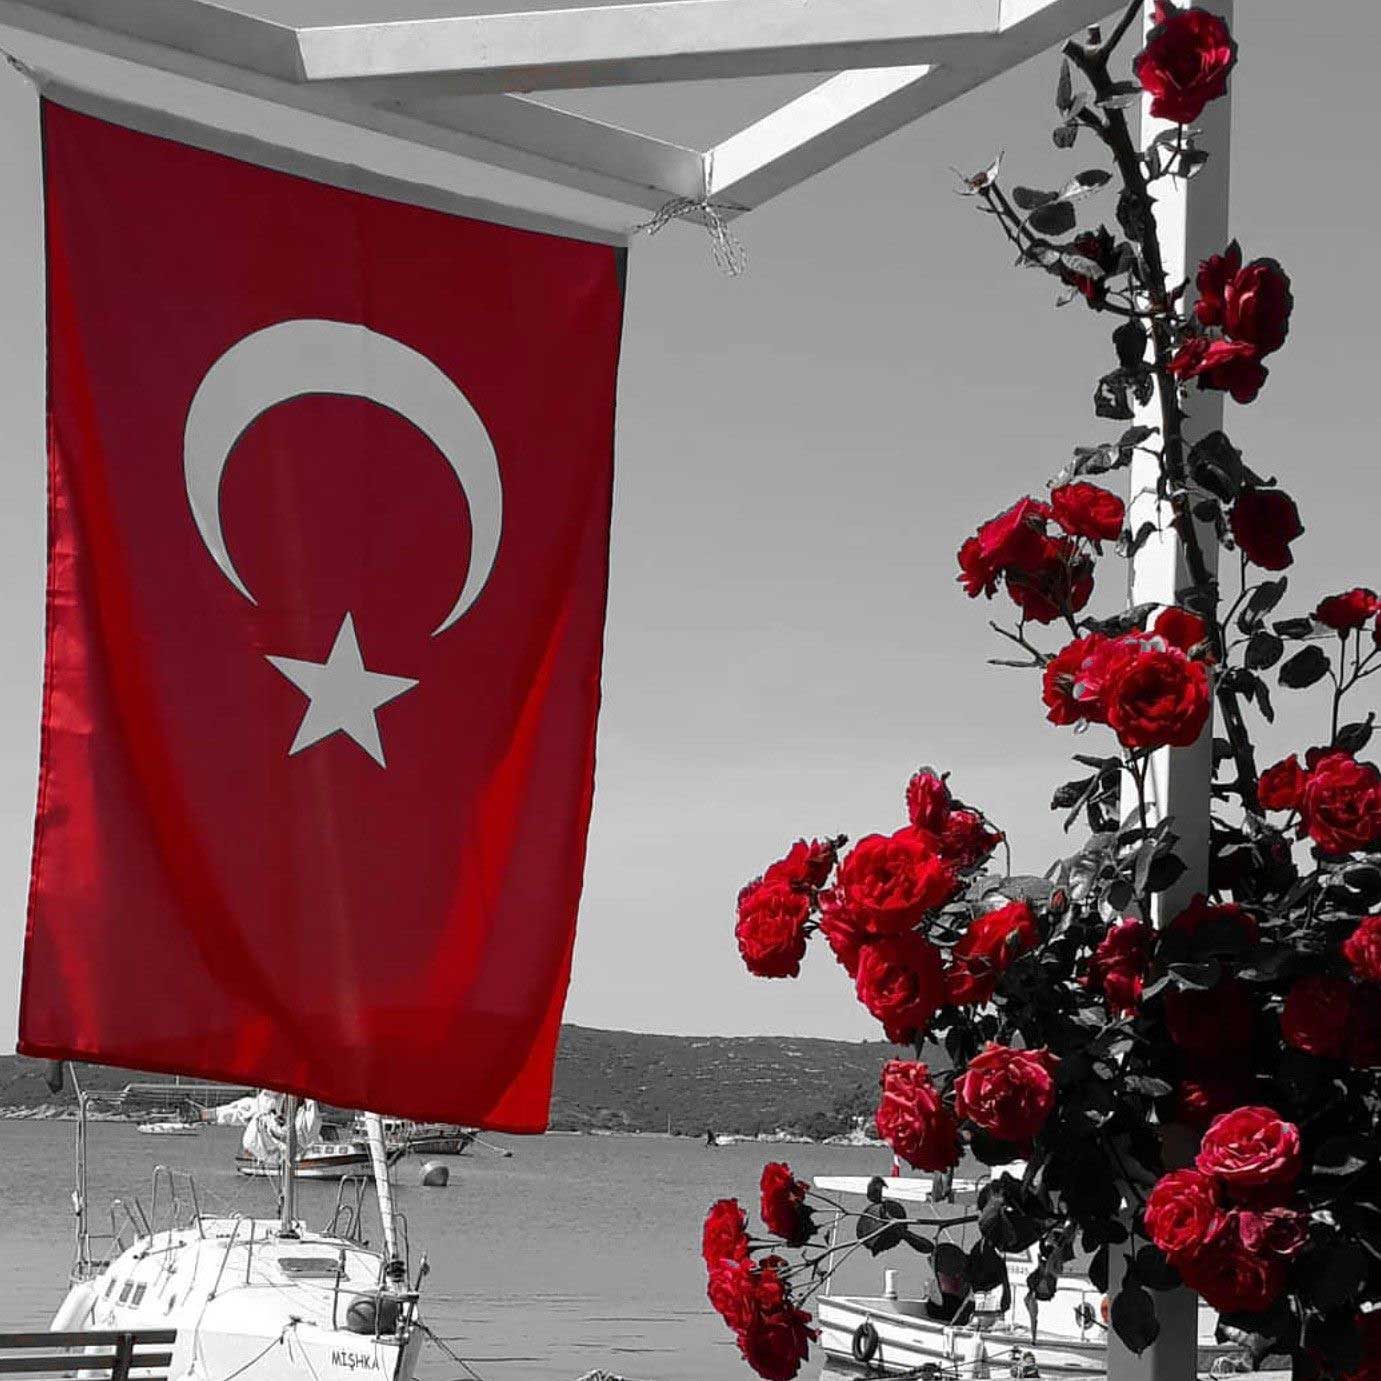 en guzel ay yildizli turk bayragi resimleri 20